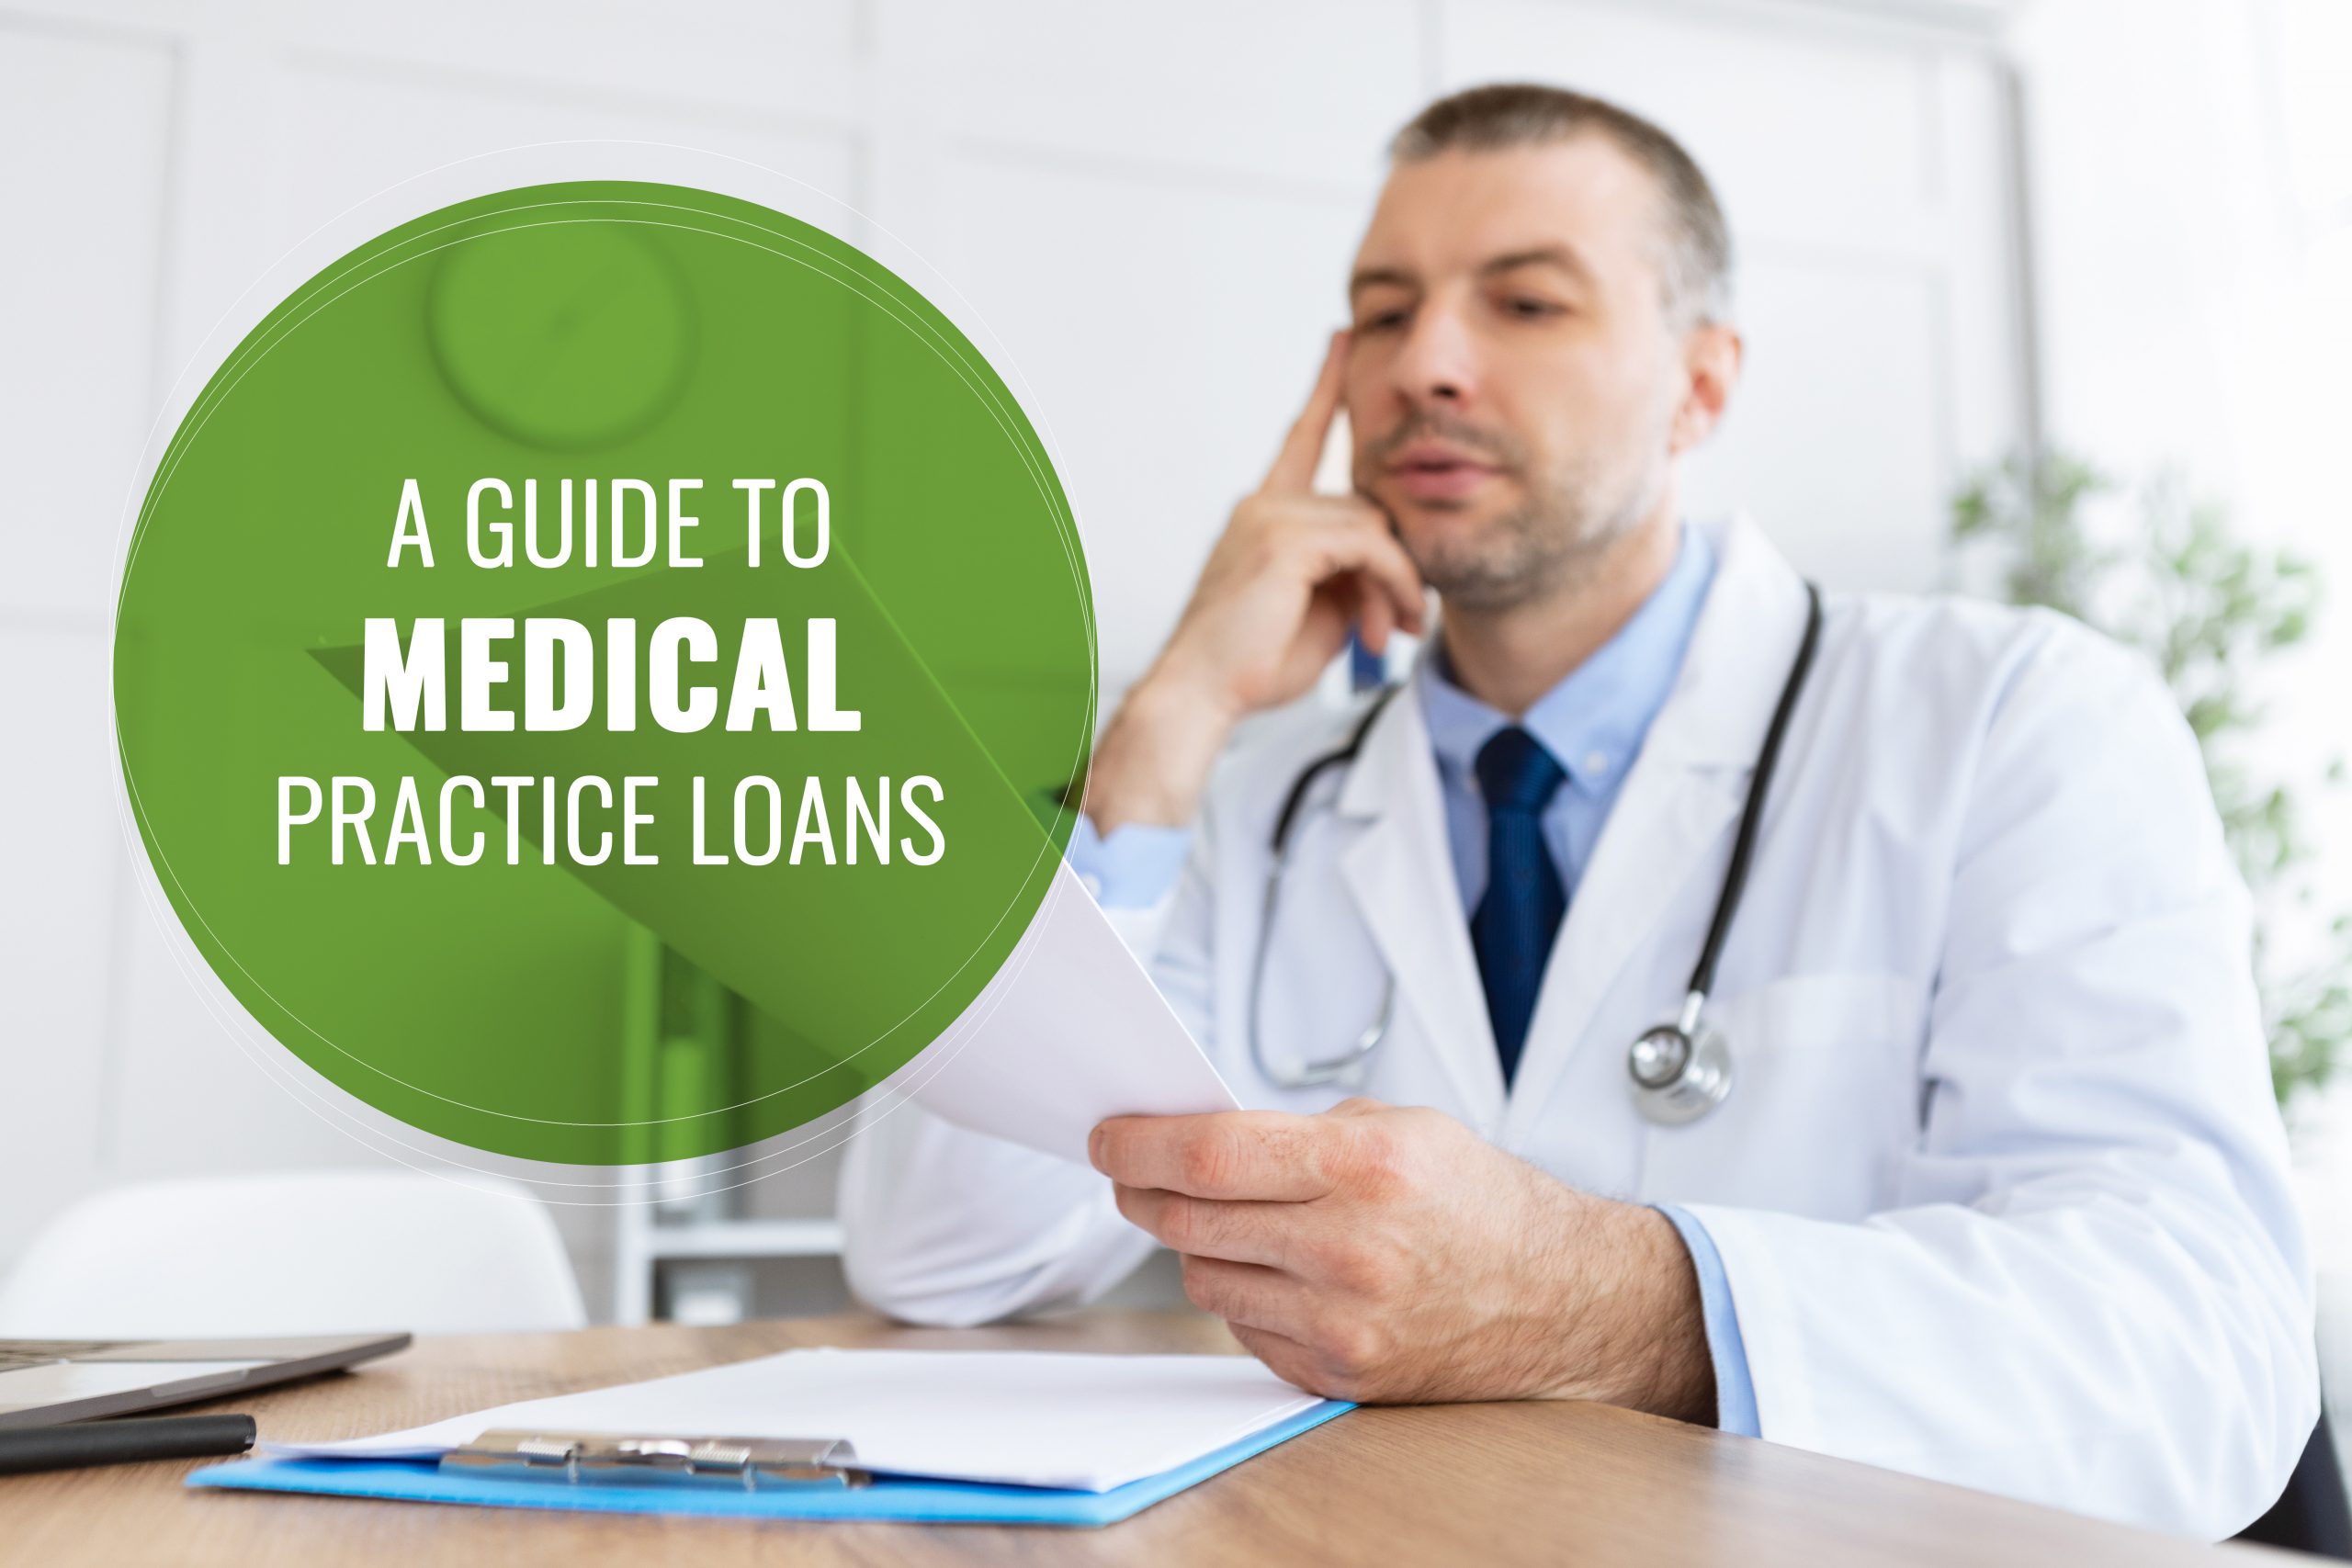 Medical practice loans